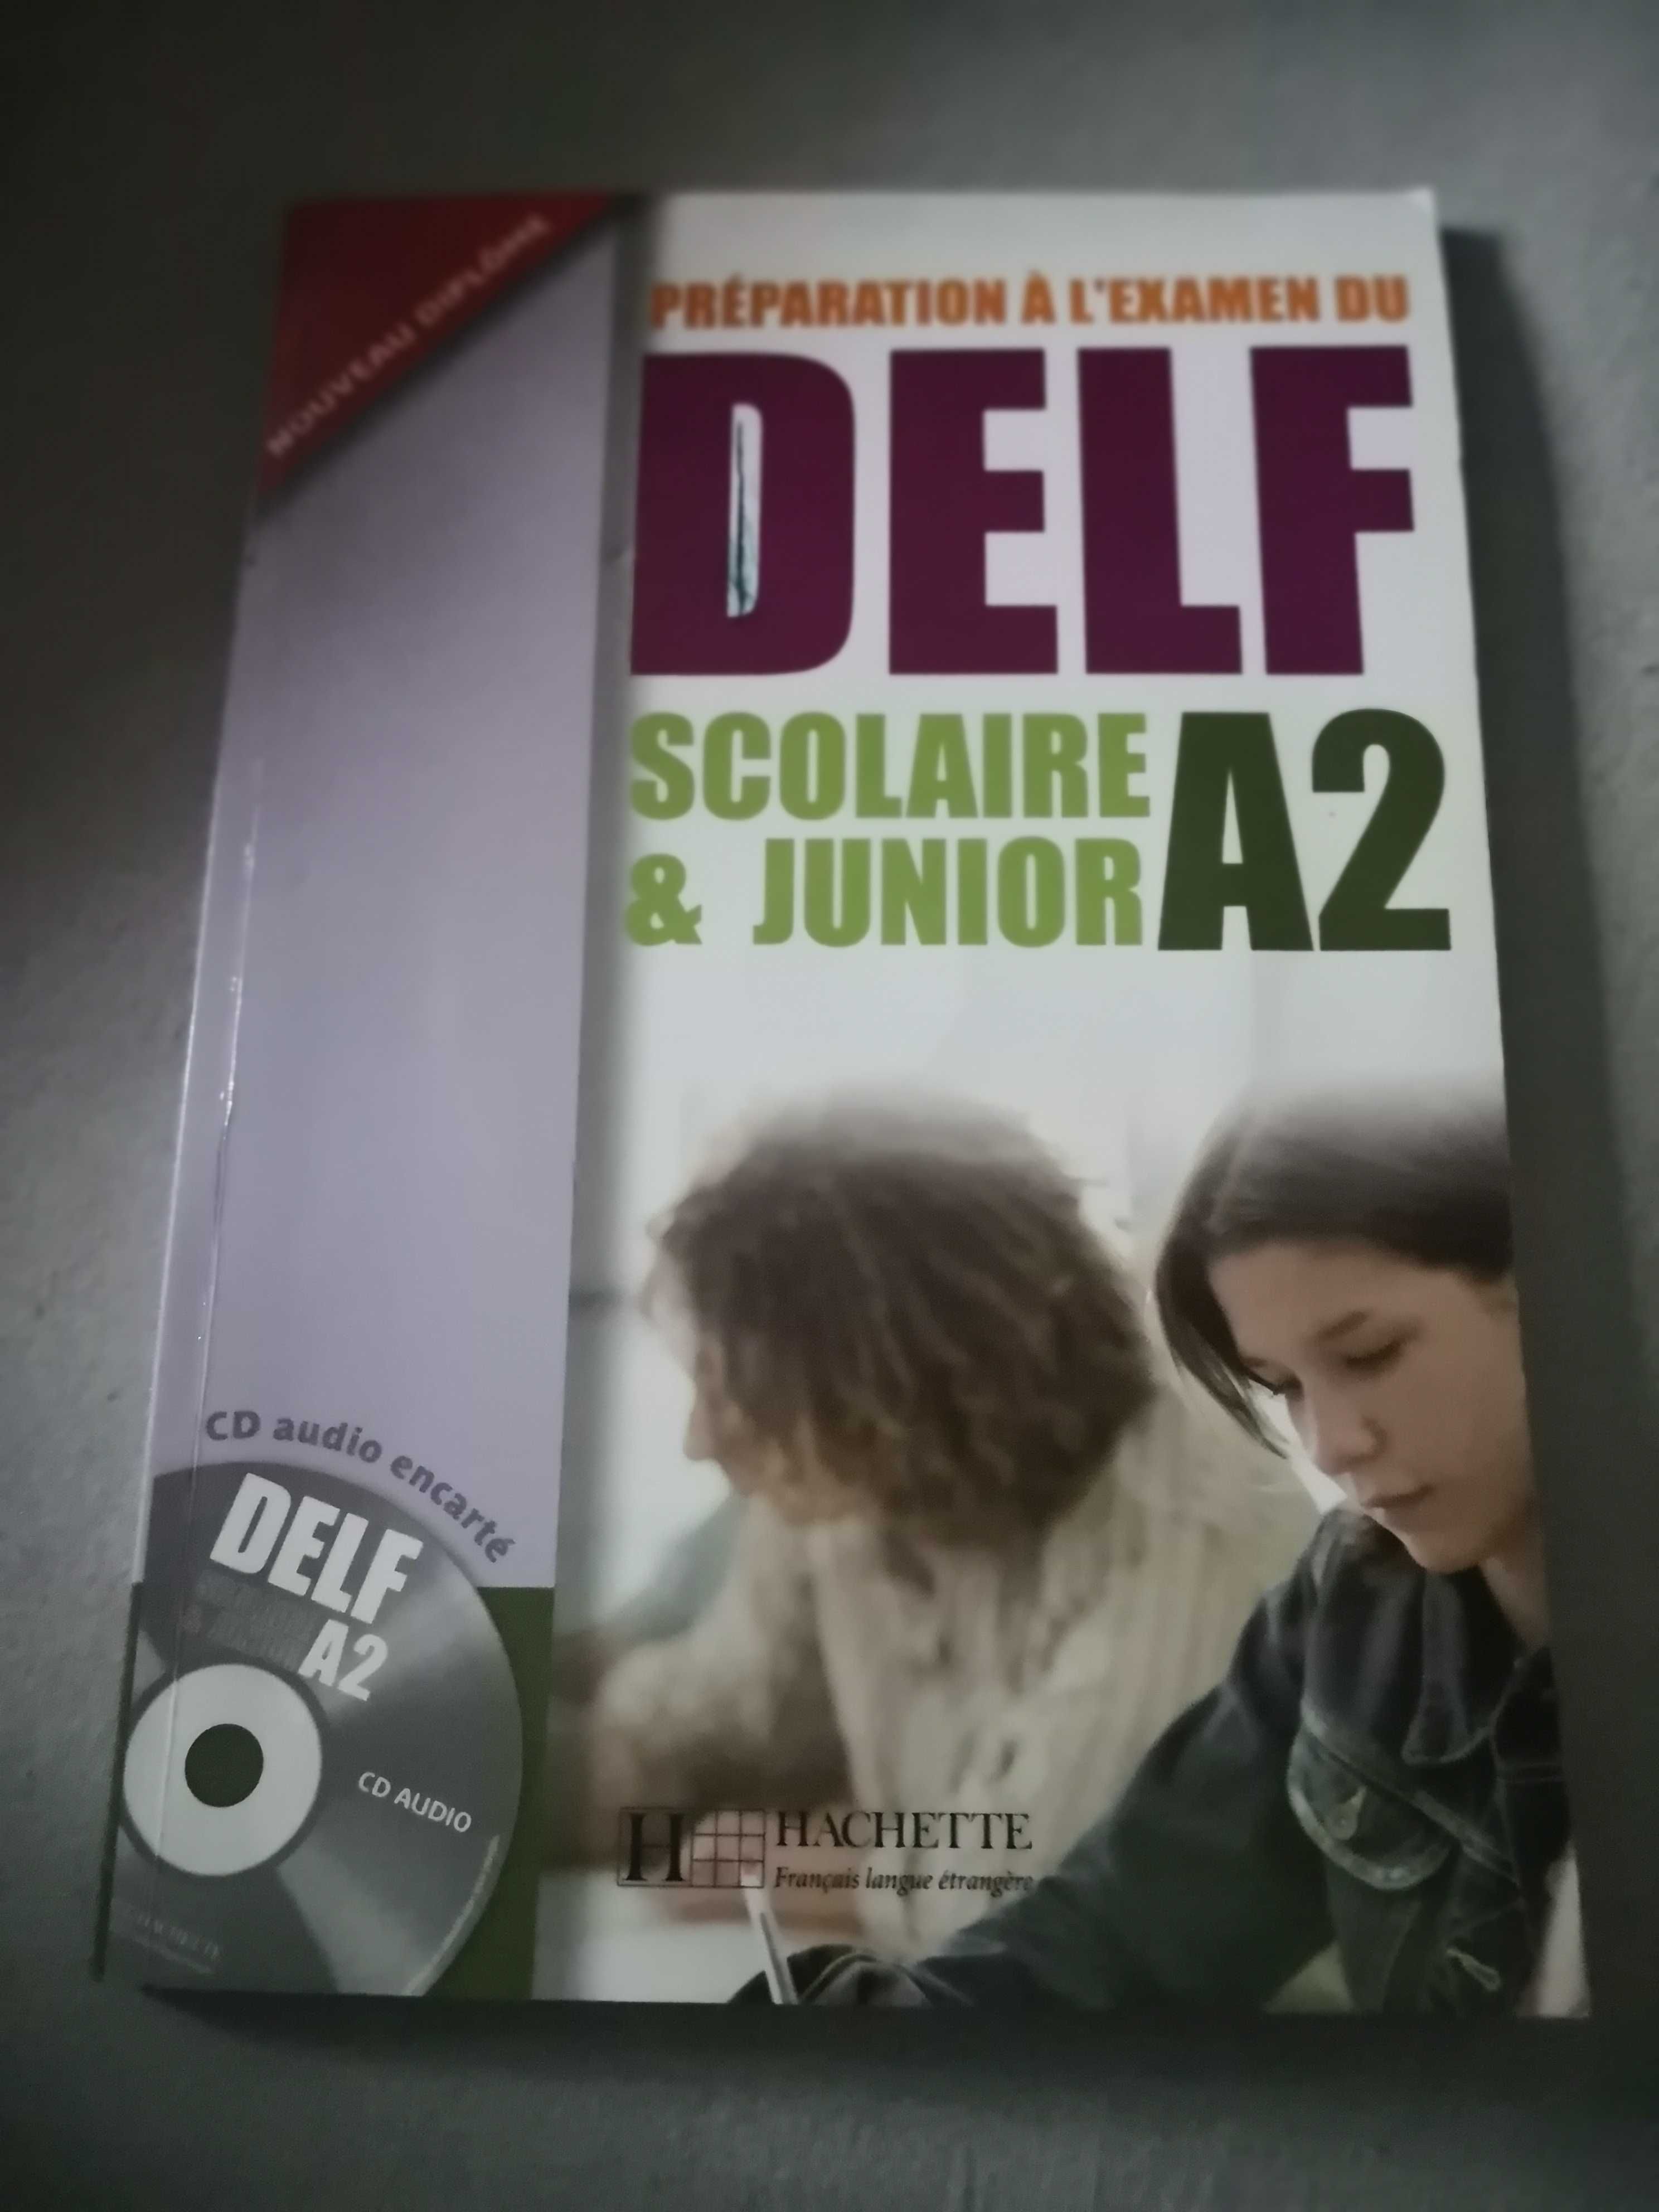 Podręcznik, Repetytorium Delf A2 scolaire & junior z płytą